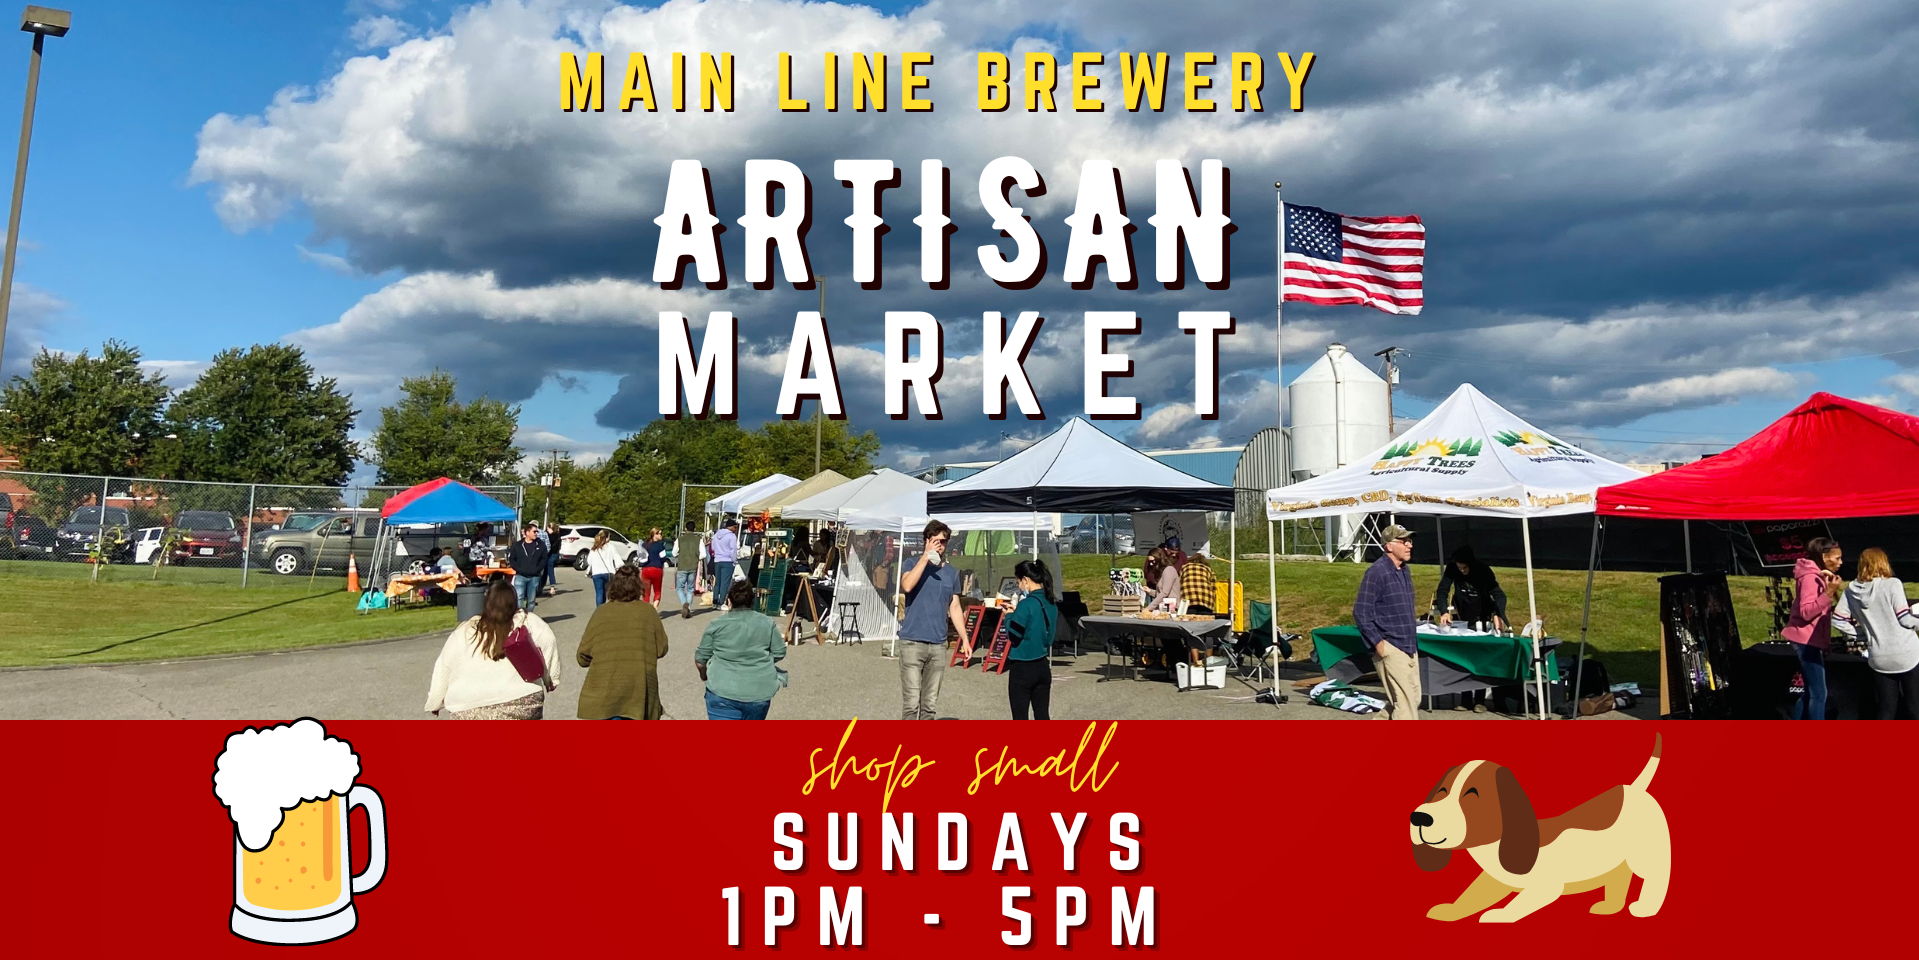 Artisan Market at Main Line Brewery  promotional image